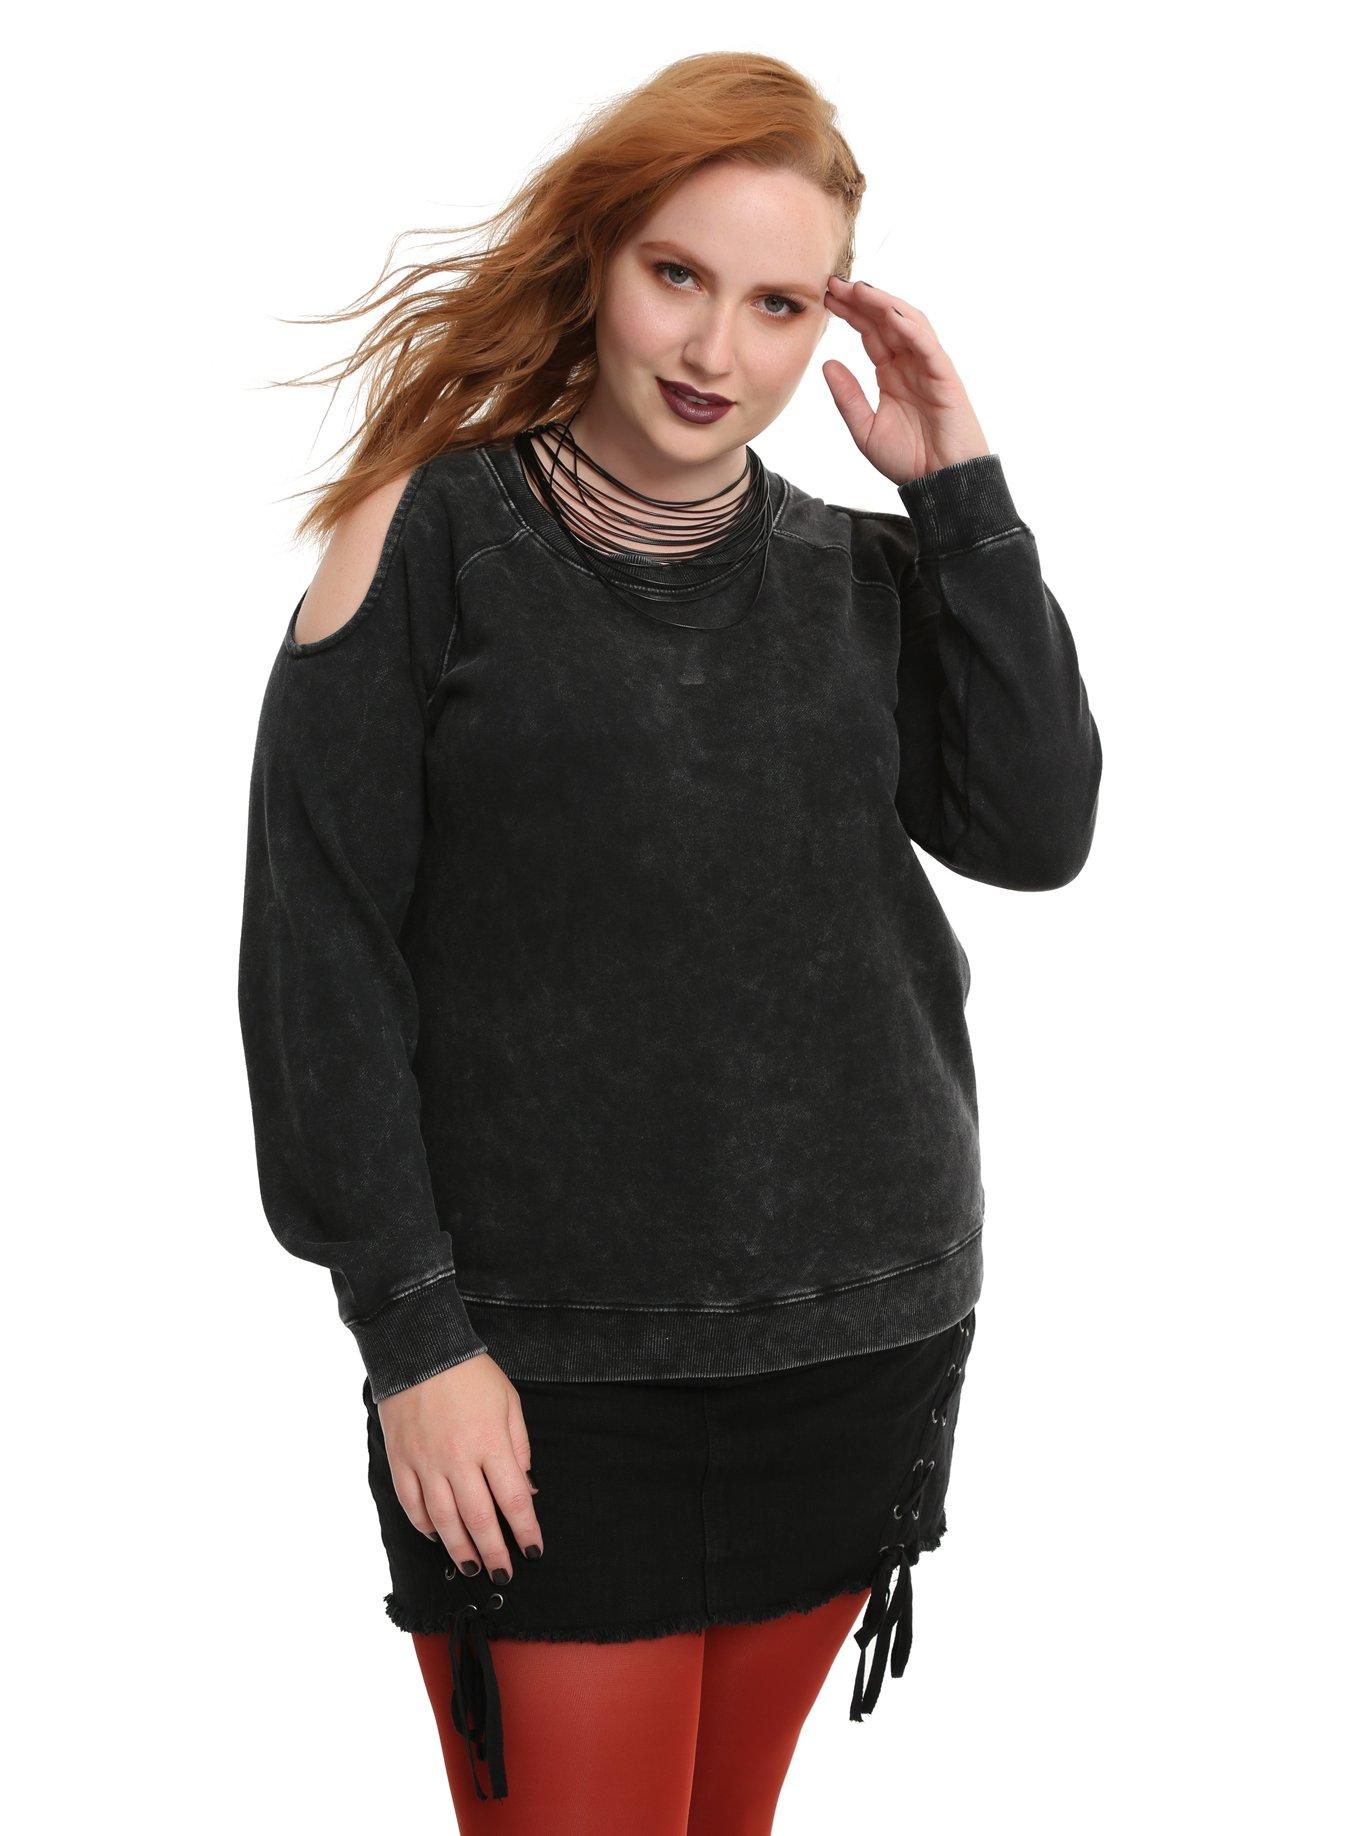 Faded Black Cold Shoulder Girls Sweatshirt Plus Size, RAINBOW, hi-res